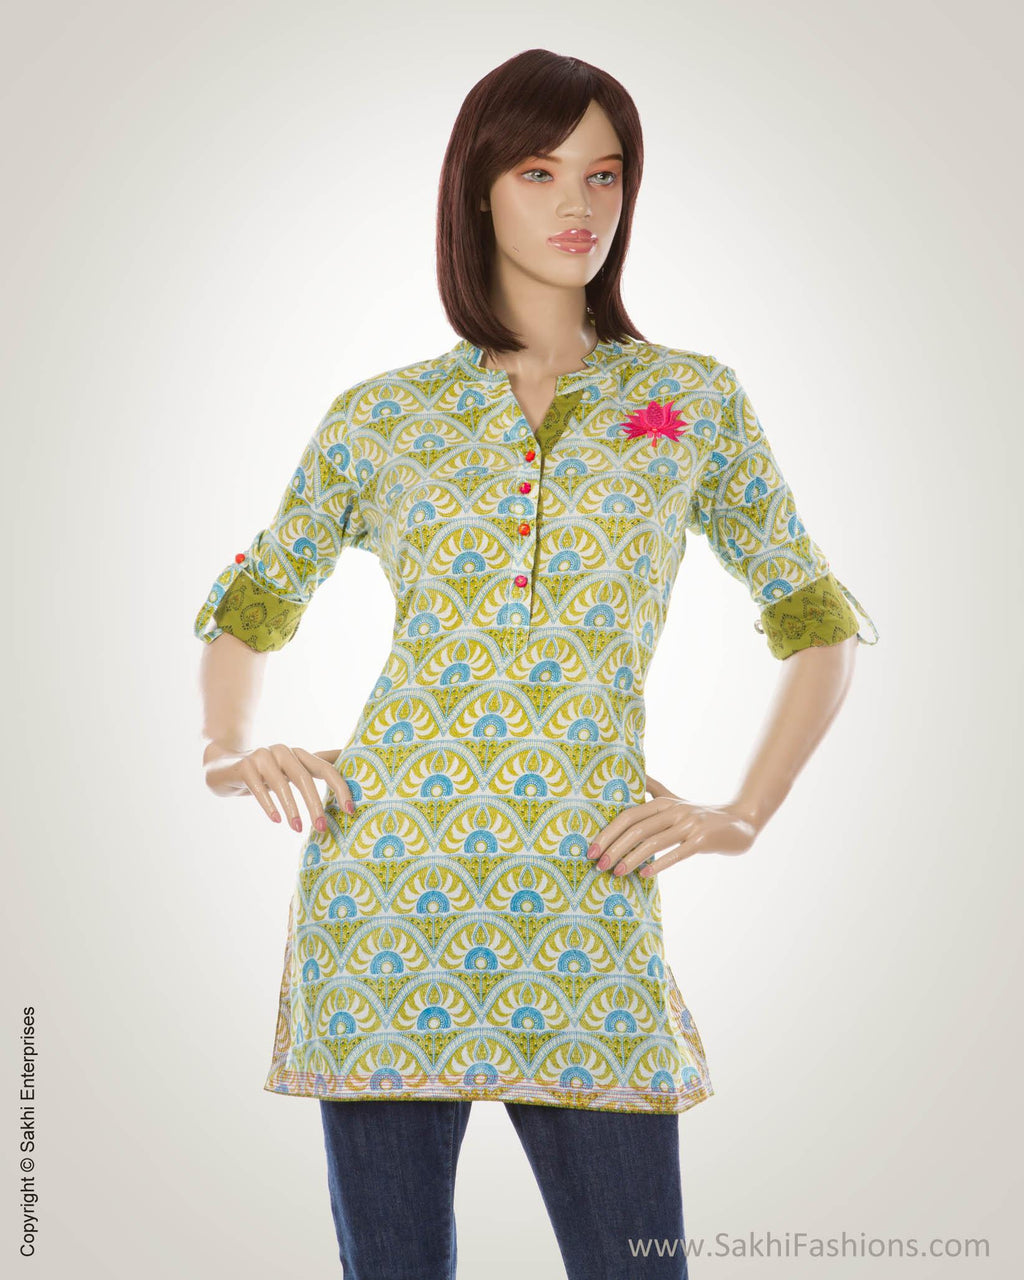 Share more than 80 sakhi fashions kurtis latest  thtantai2